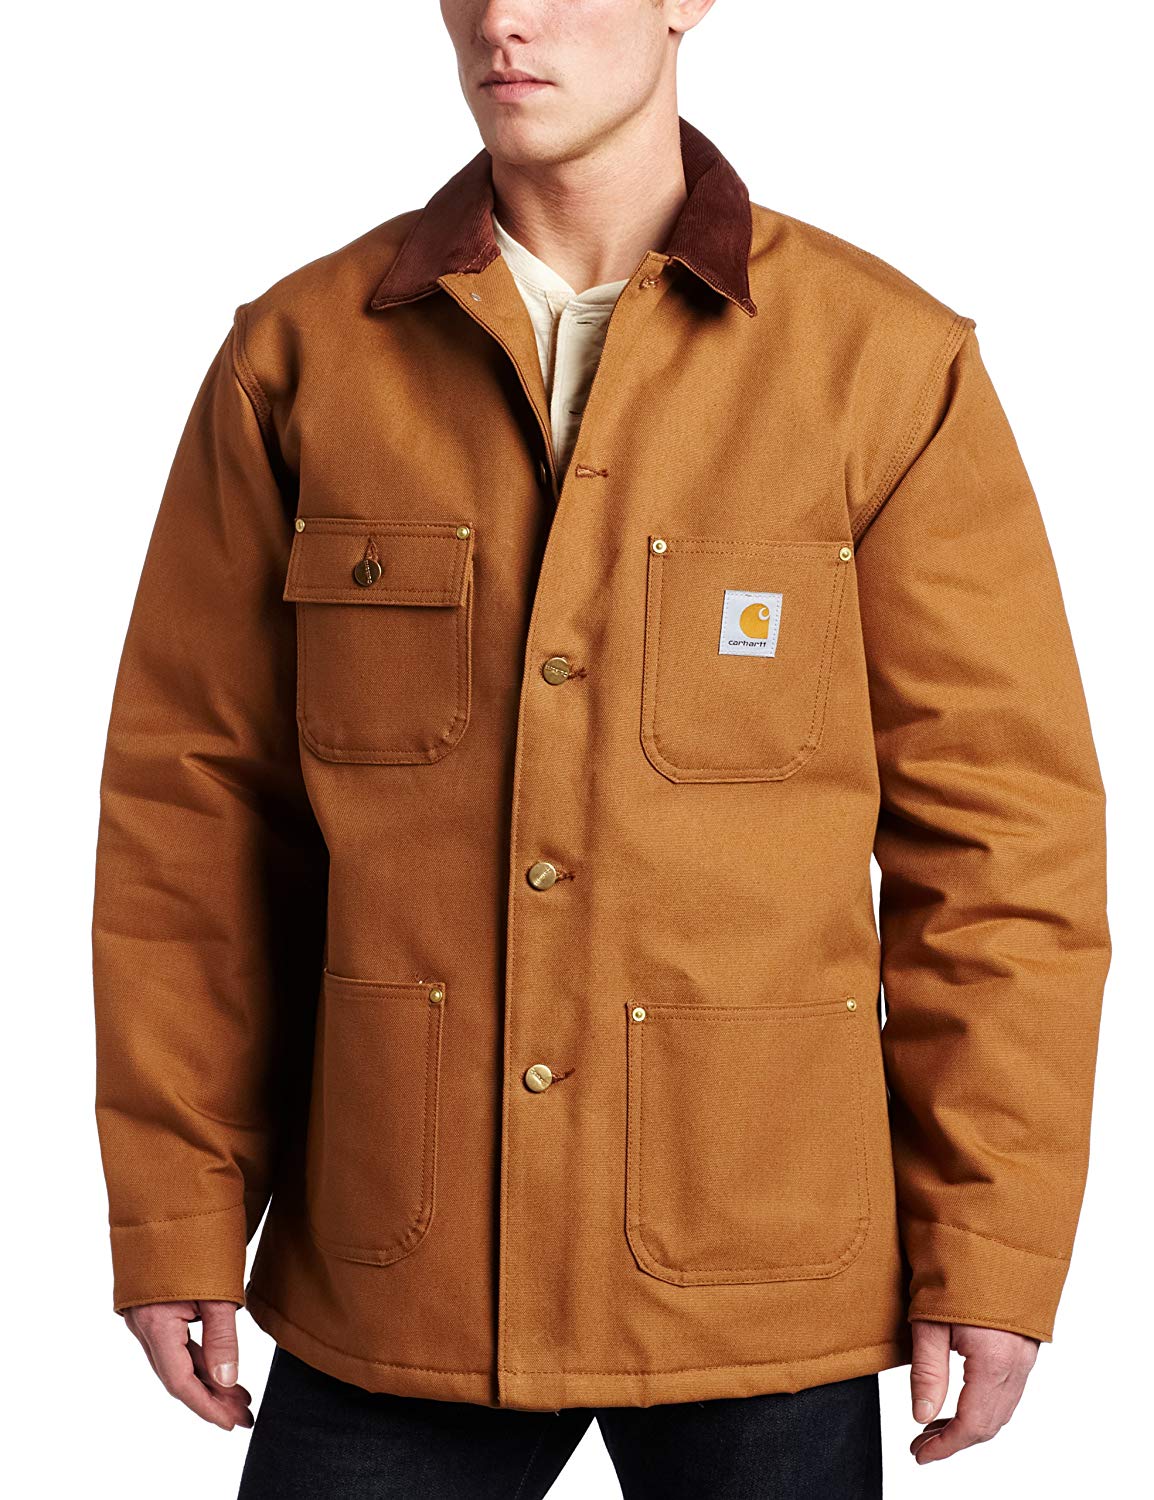 carhartt chore jacket